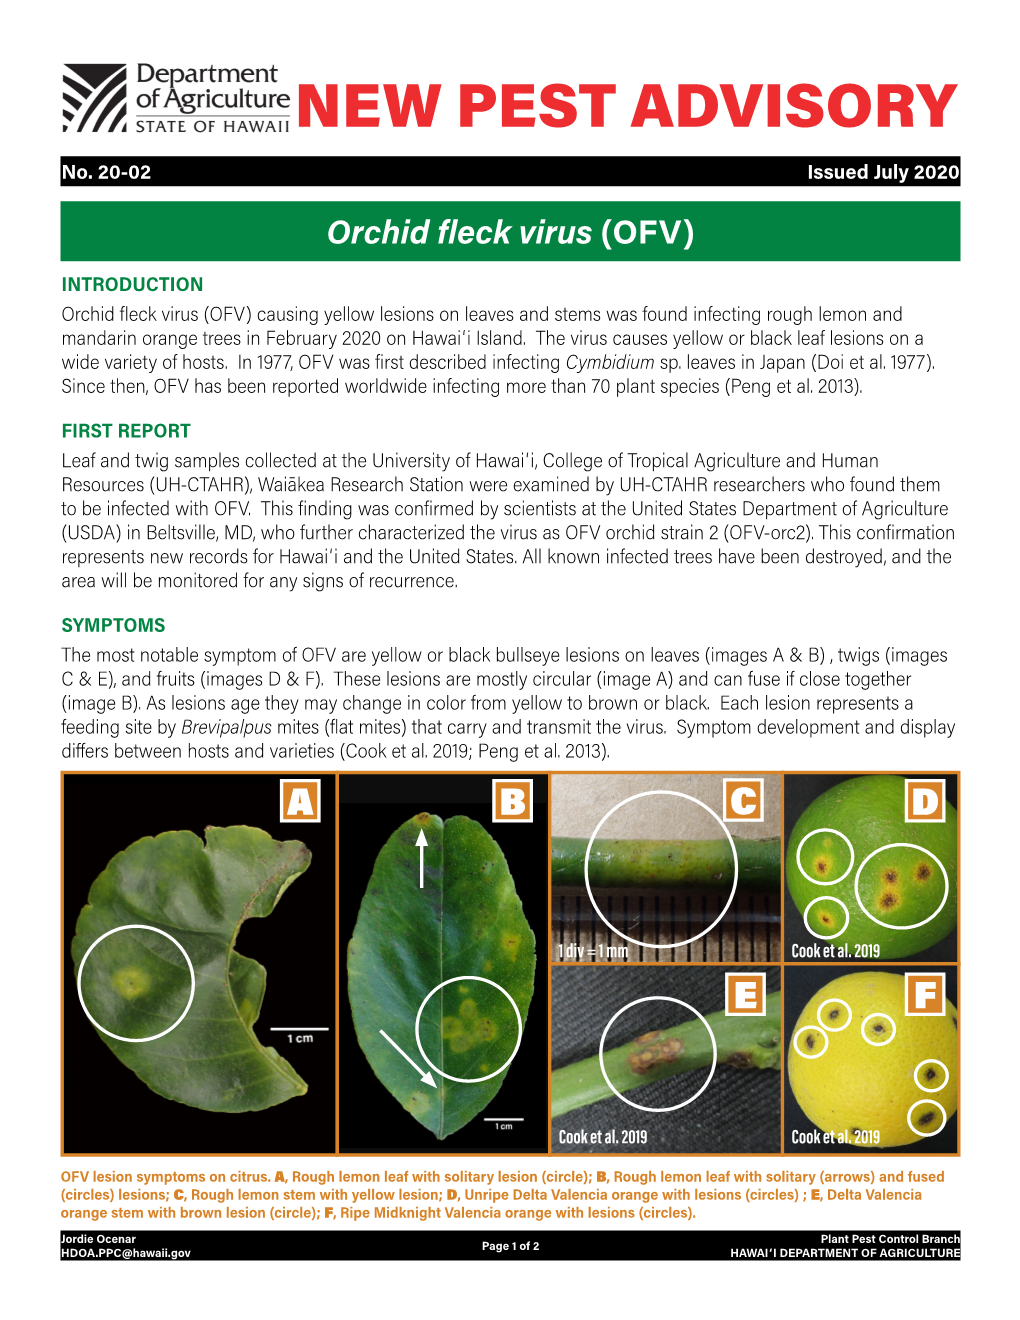 Orchid Fleck Virus (OFV)